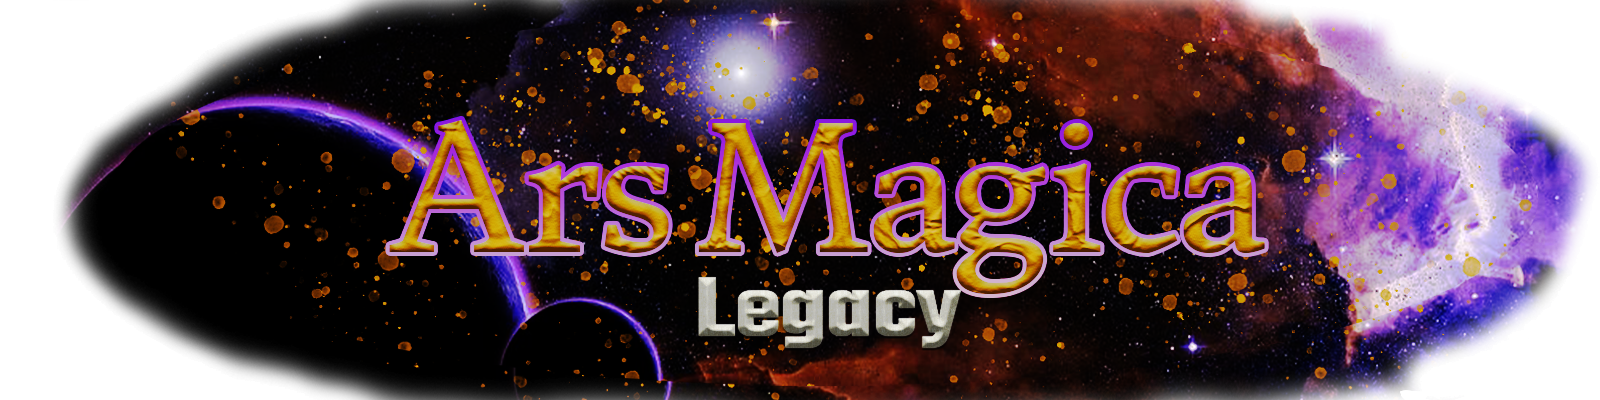 Ars Magica: Legacy screenshot 1